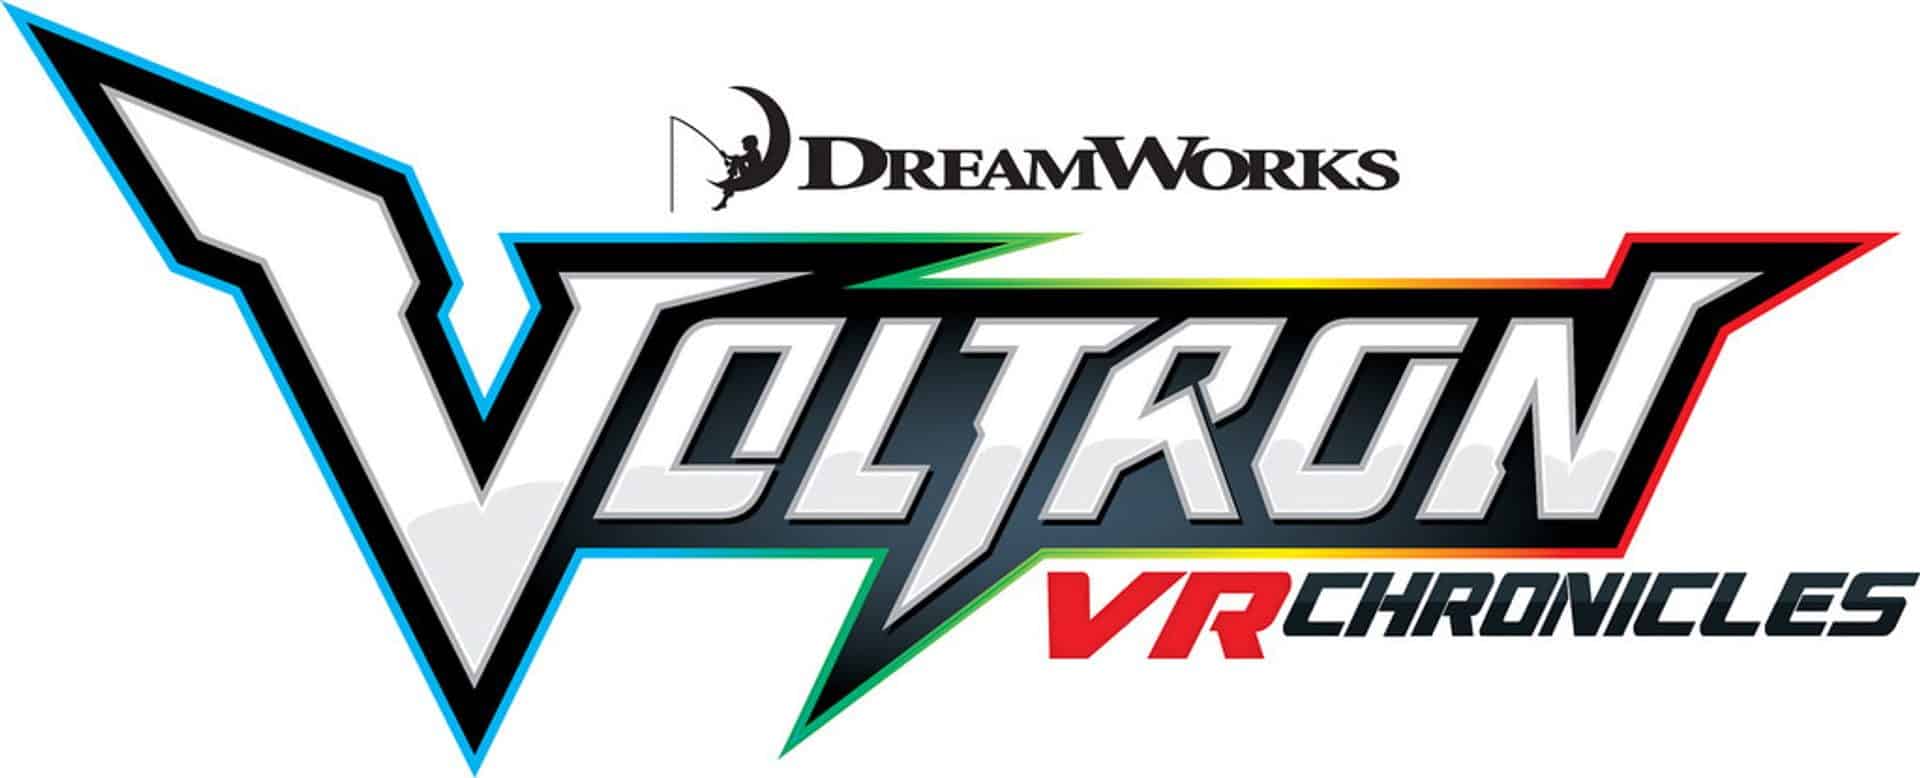 Dreamworks Voltron VR Chronicles